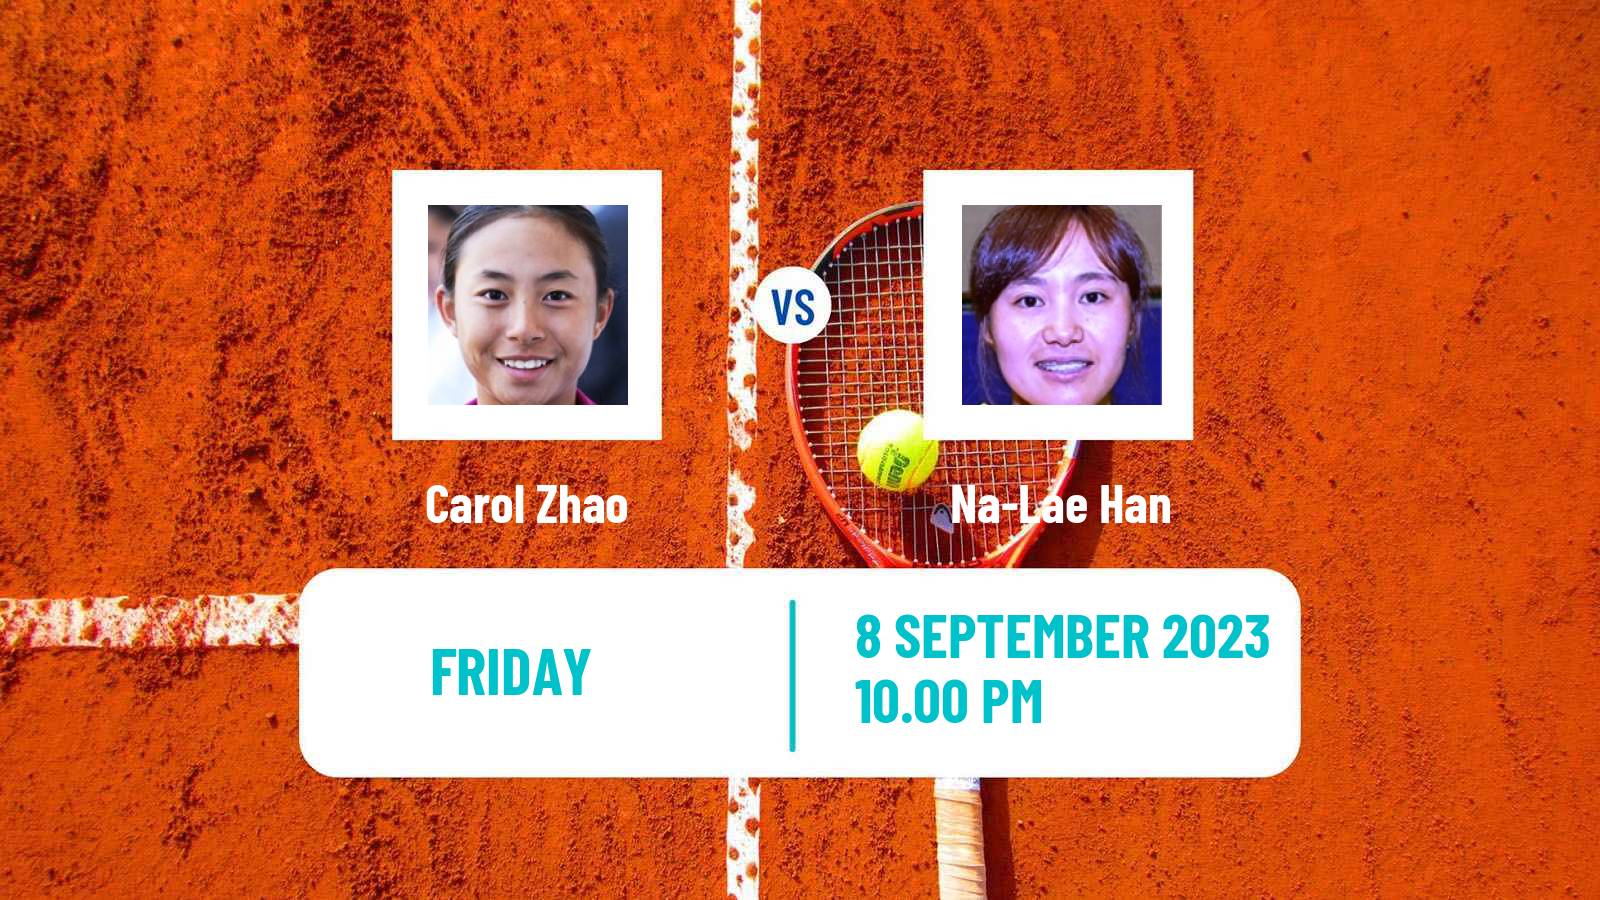 Tennis WTA Osaka Carol Zhao - Na-Lae Han